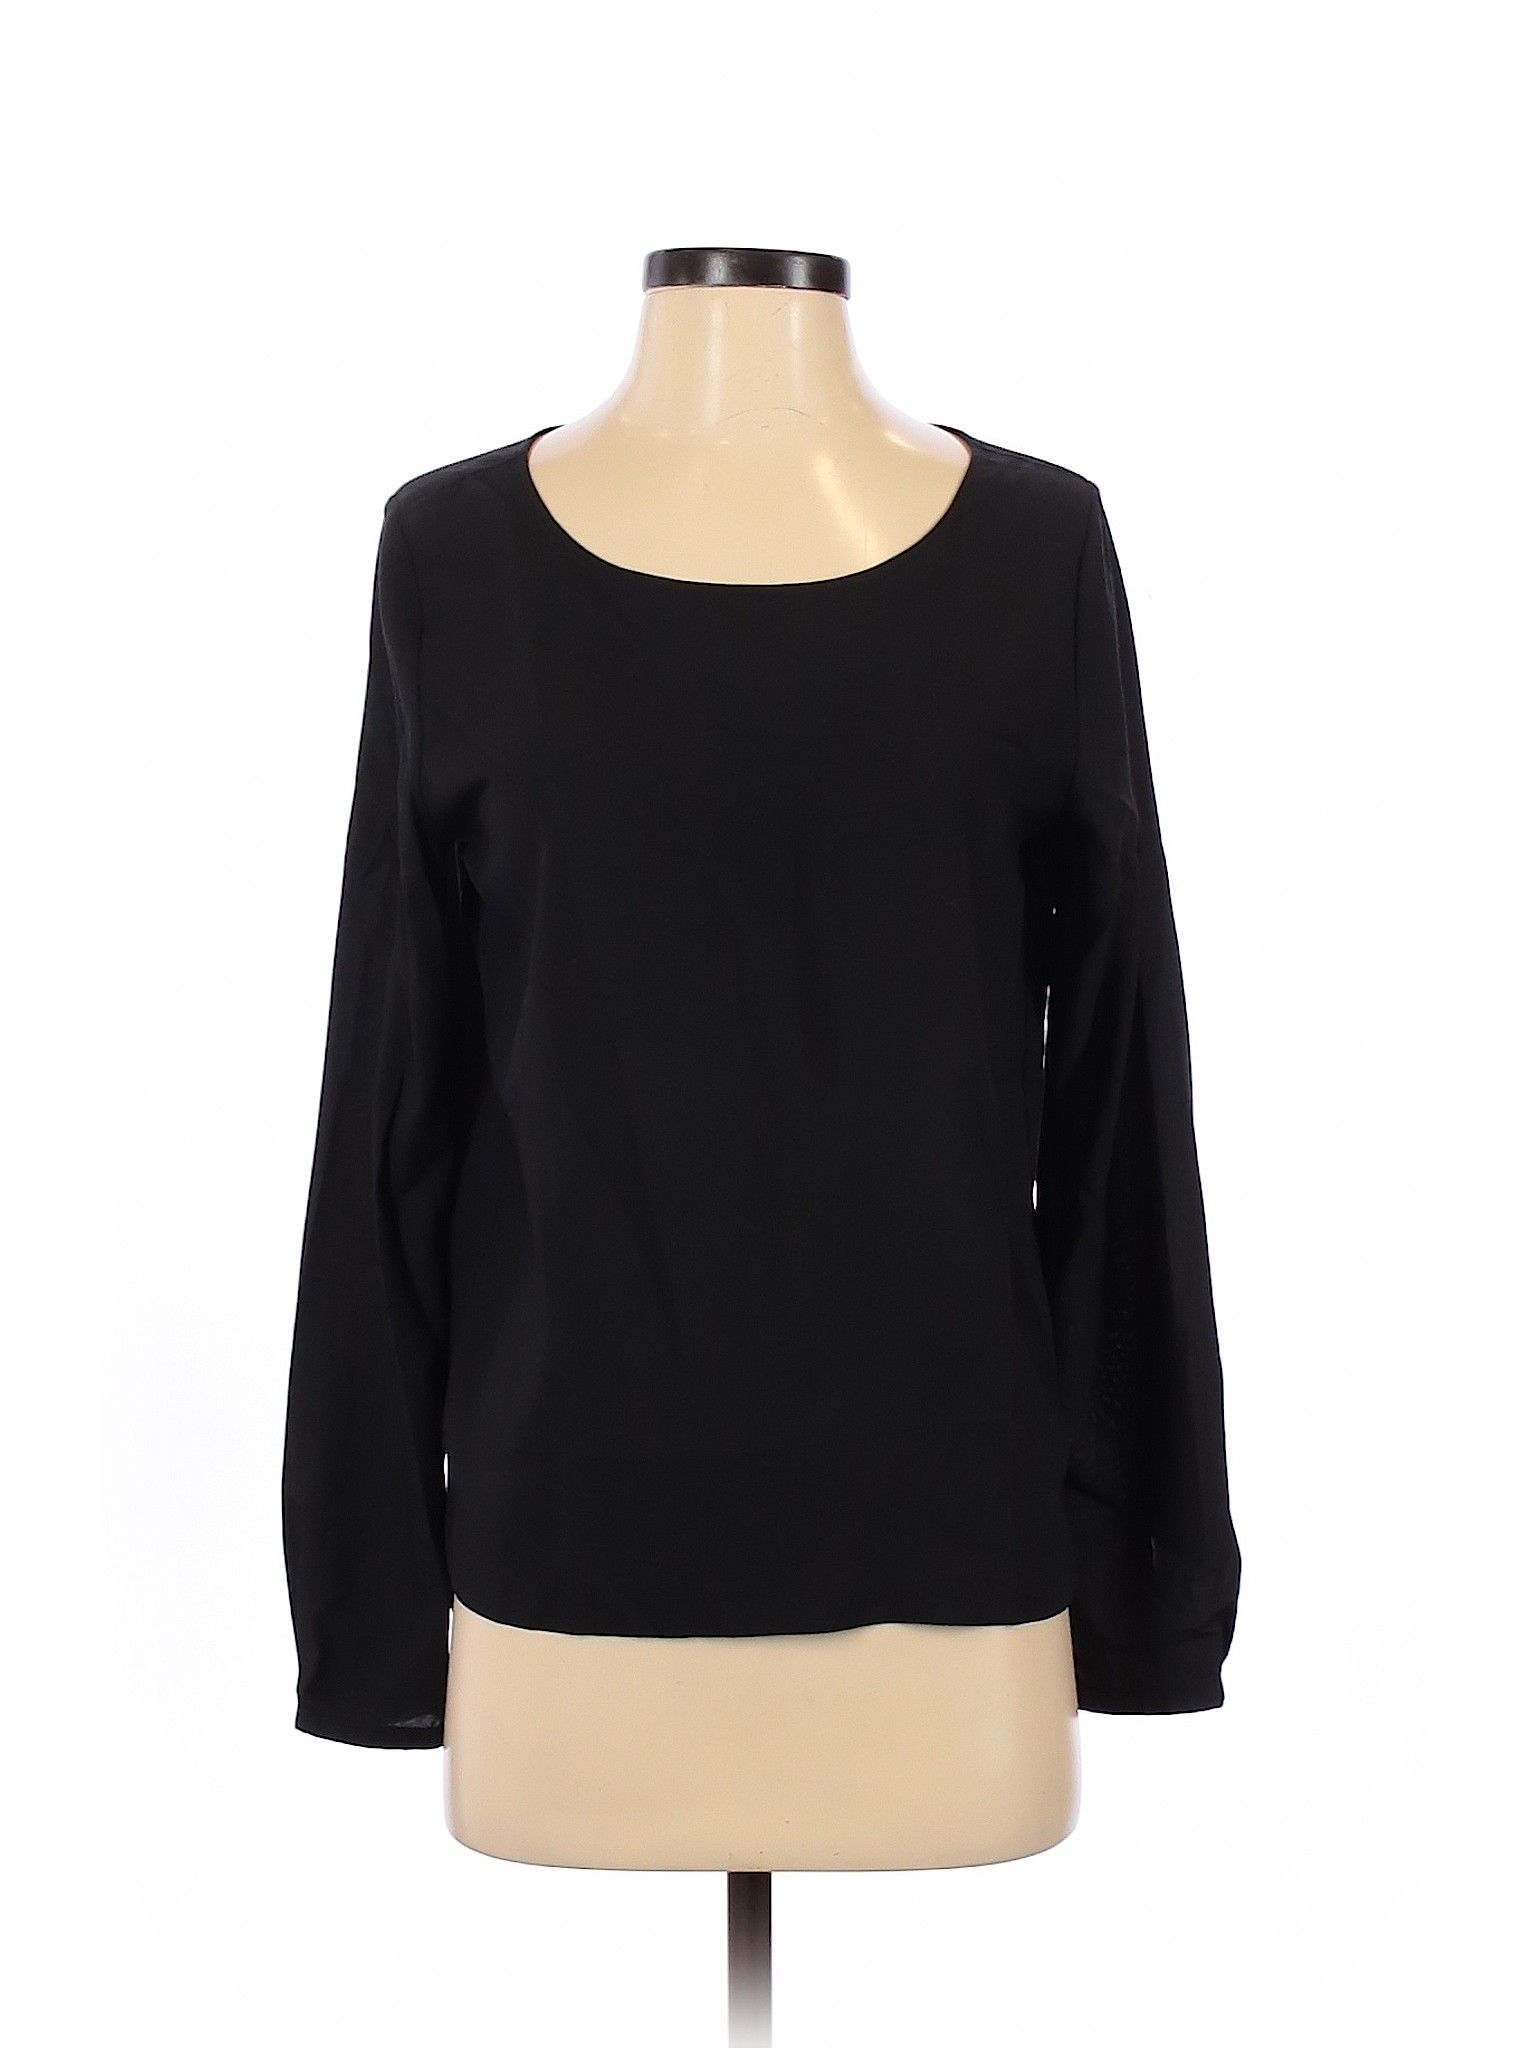 Uniqlo Women Black Long Sleeve Blouse S | eBay